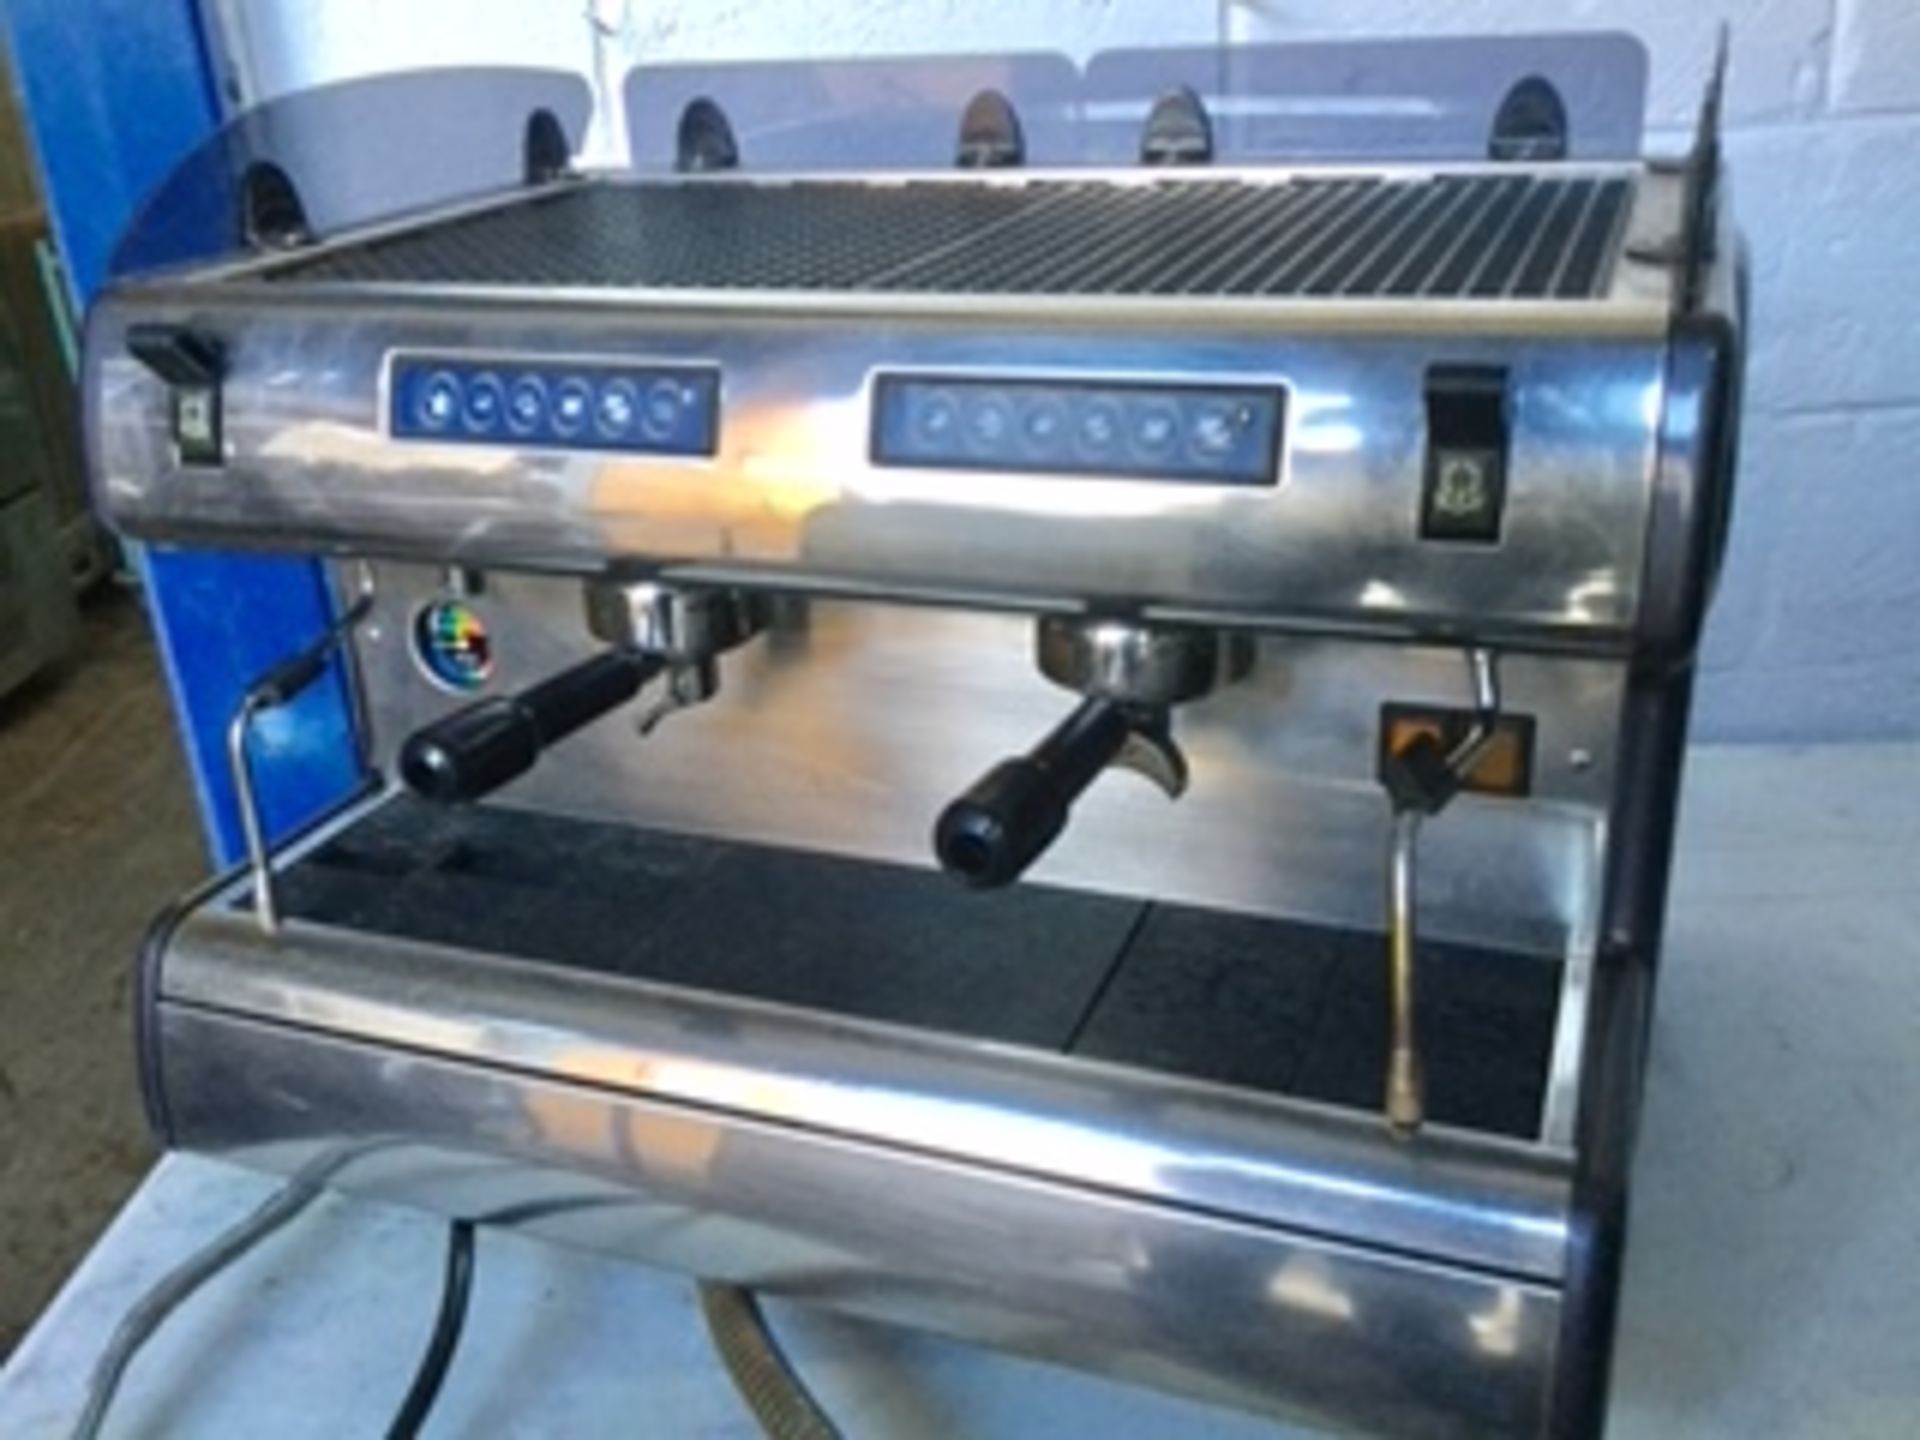 Expobar Two Group Espresso Coffee Machine – NO VAT